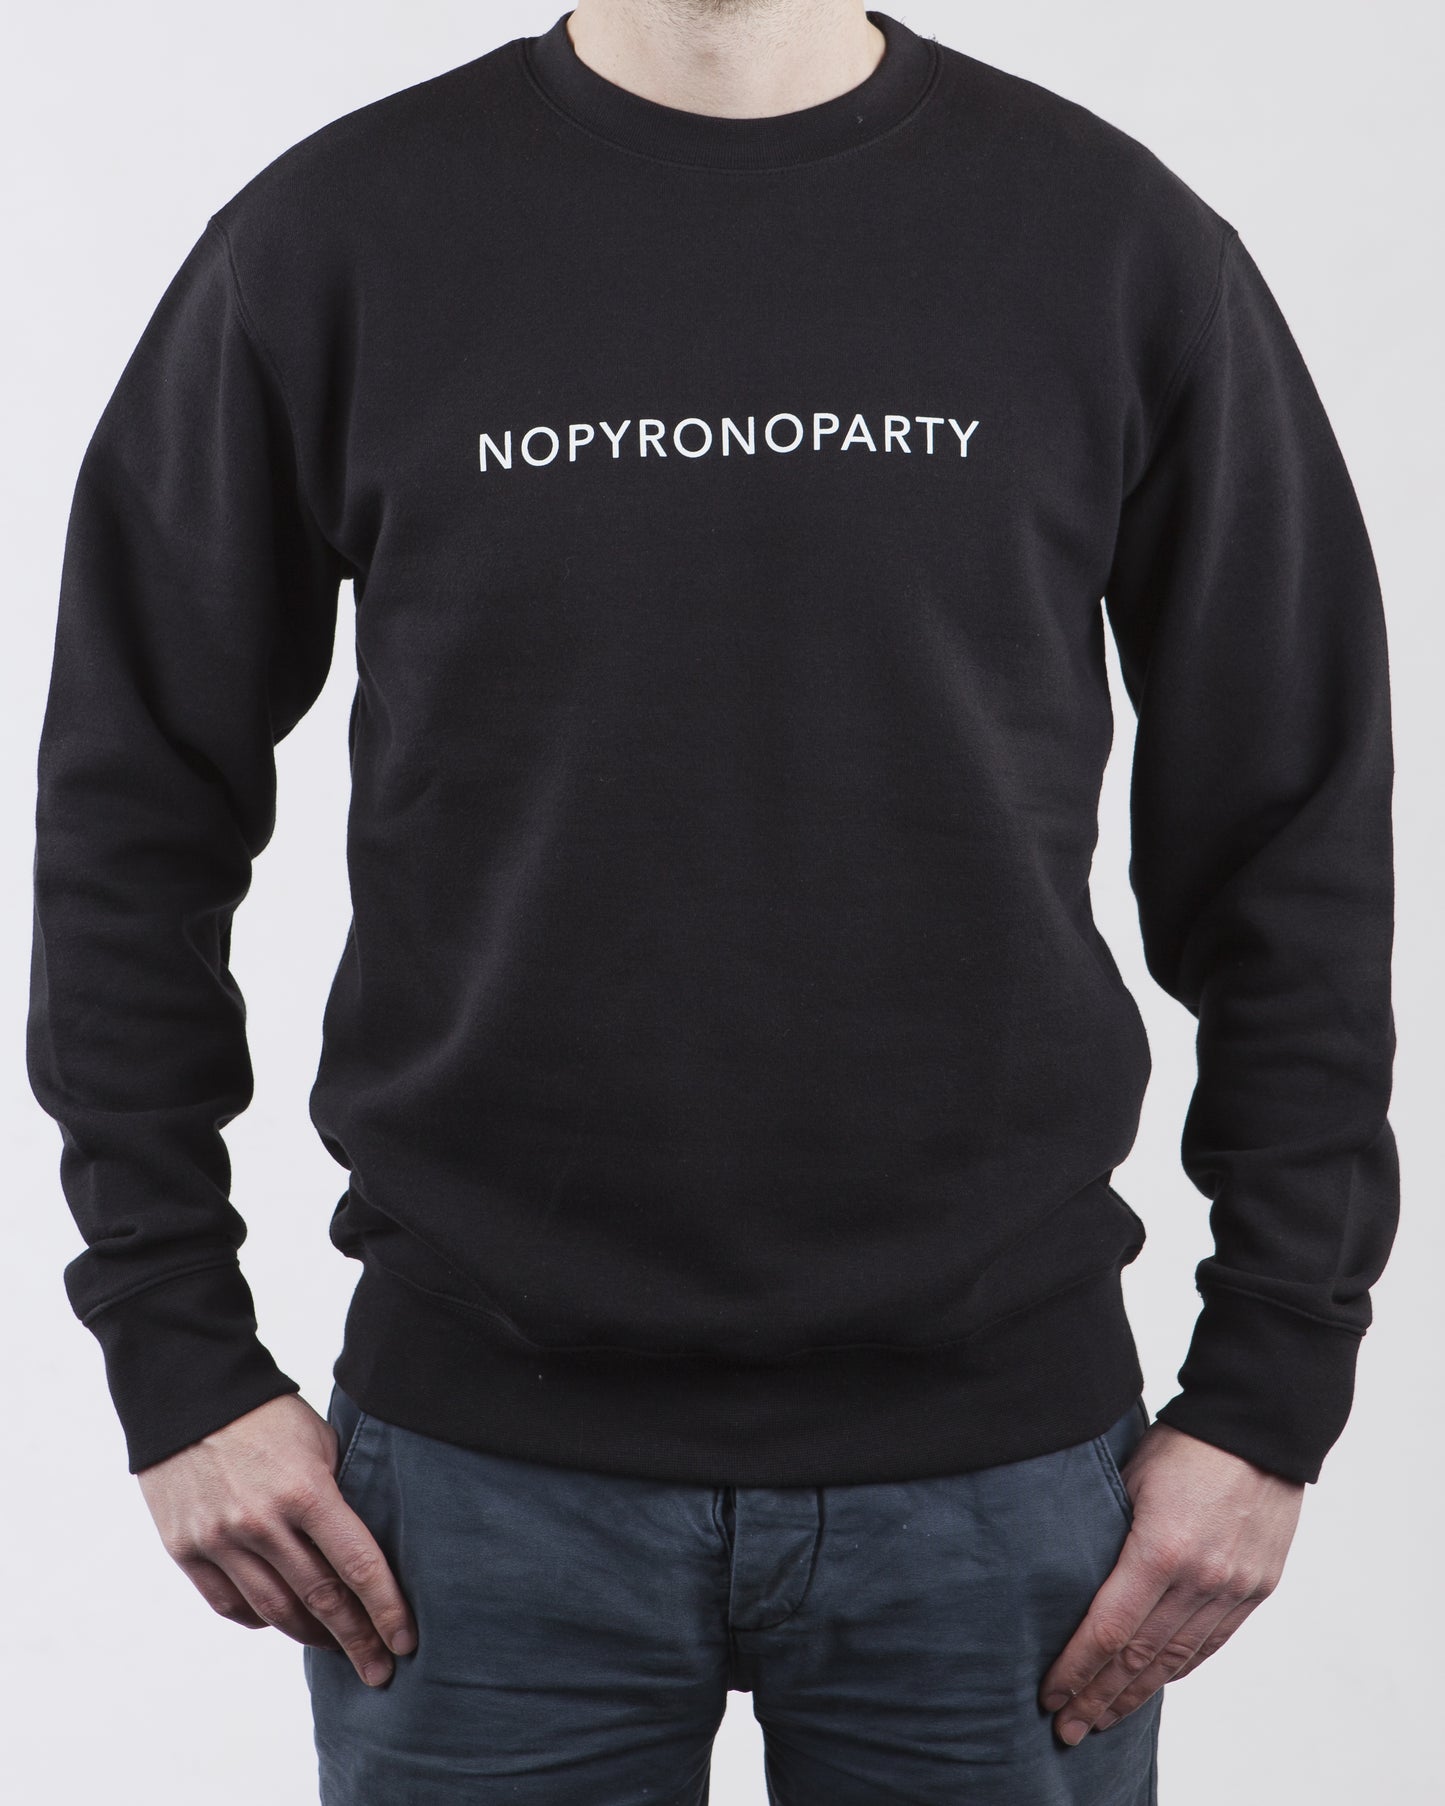 NOPYRONOPARTY (Black)